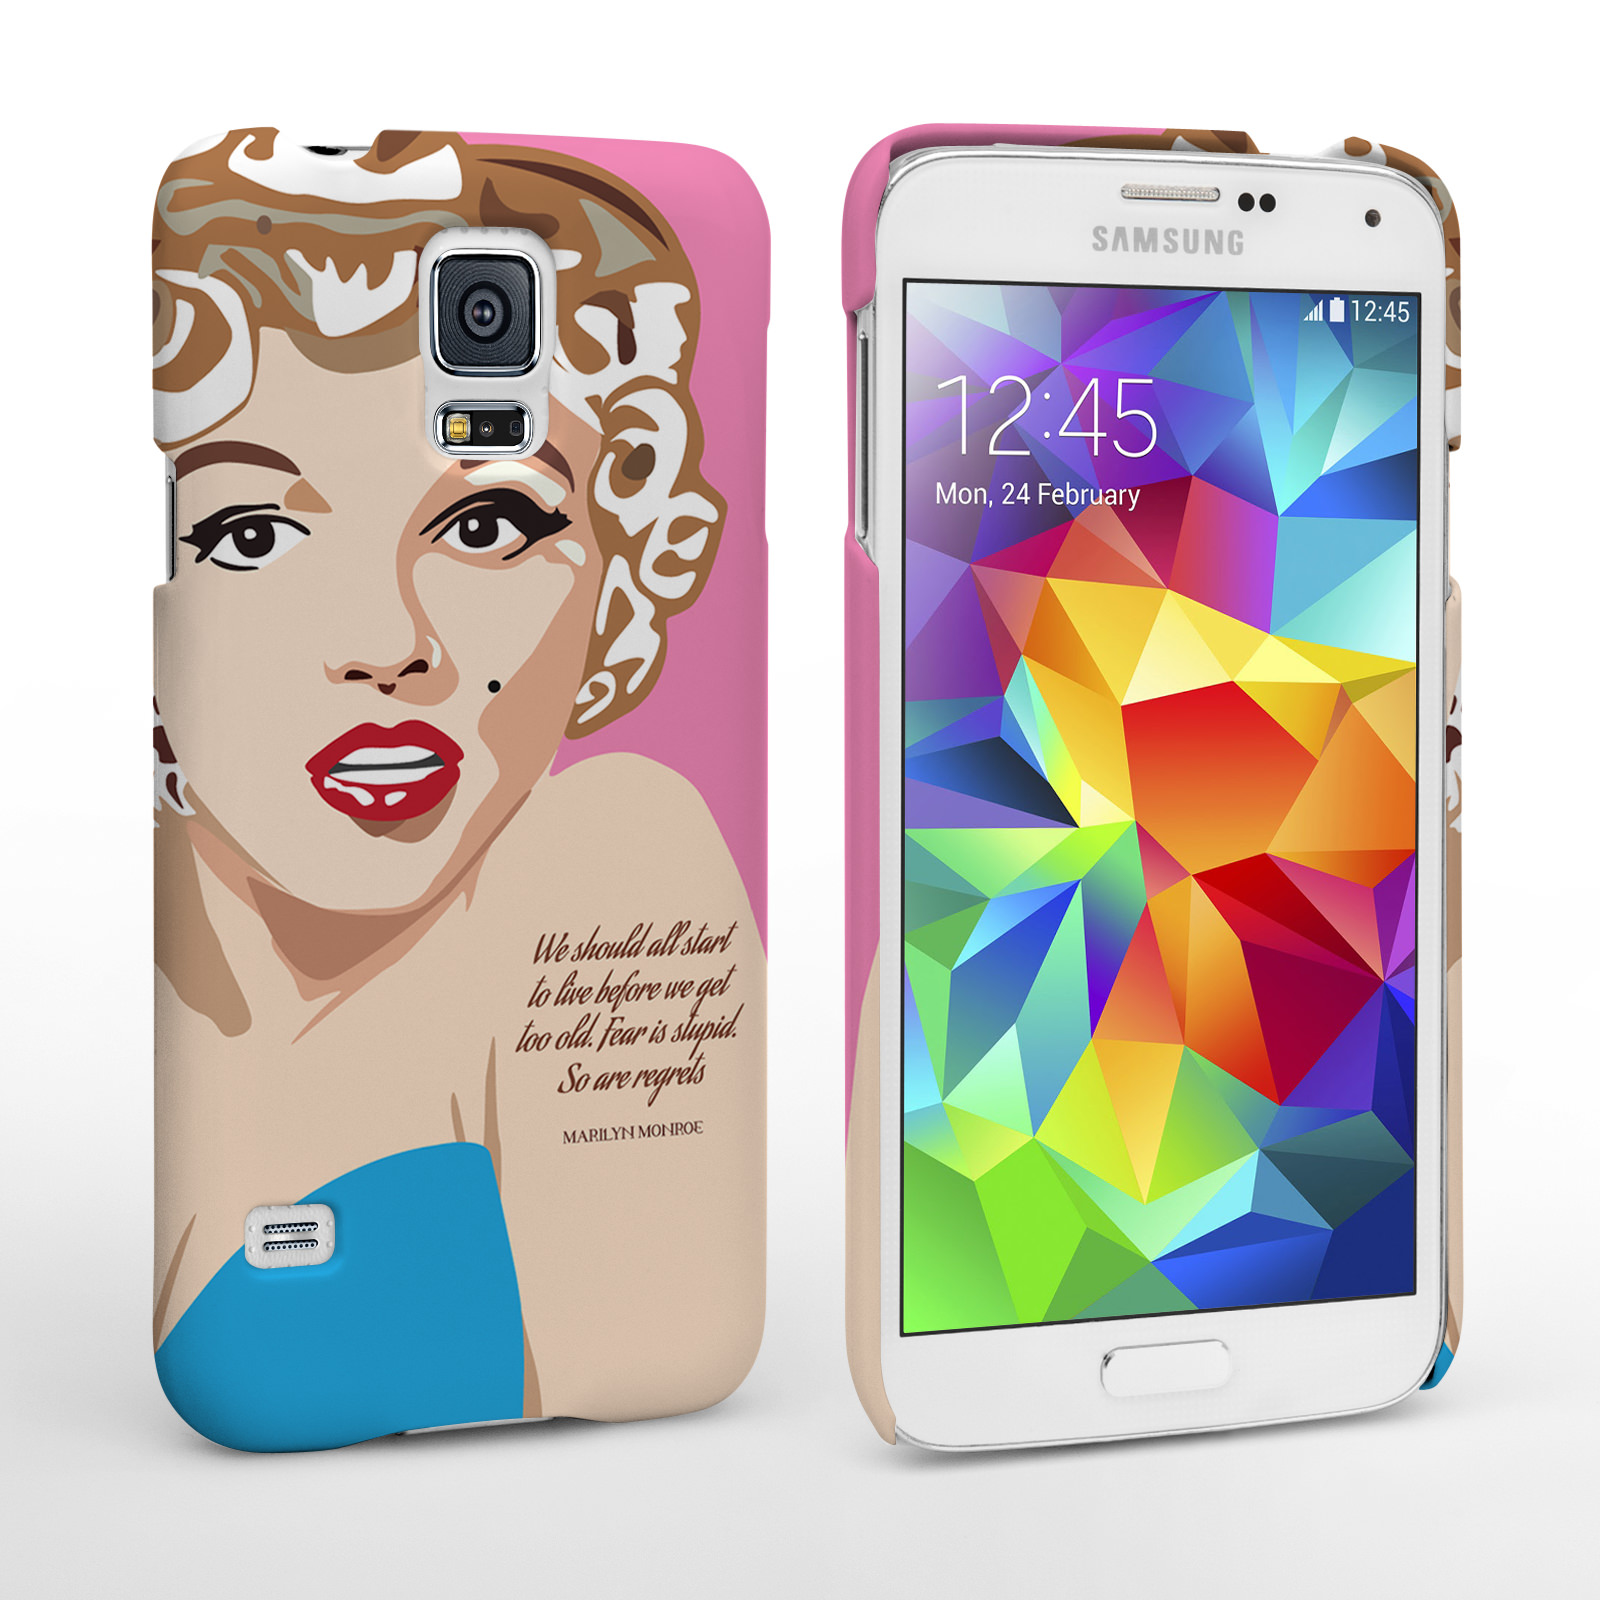 Caseflex Samsung Galaxy S5 Marilyn Monroe ‘Fear is Stupid’ Quote Case